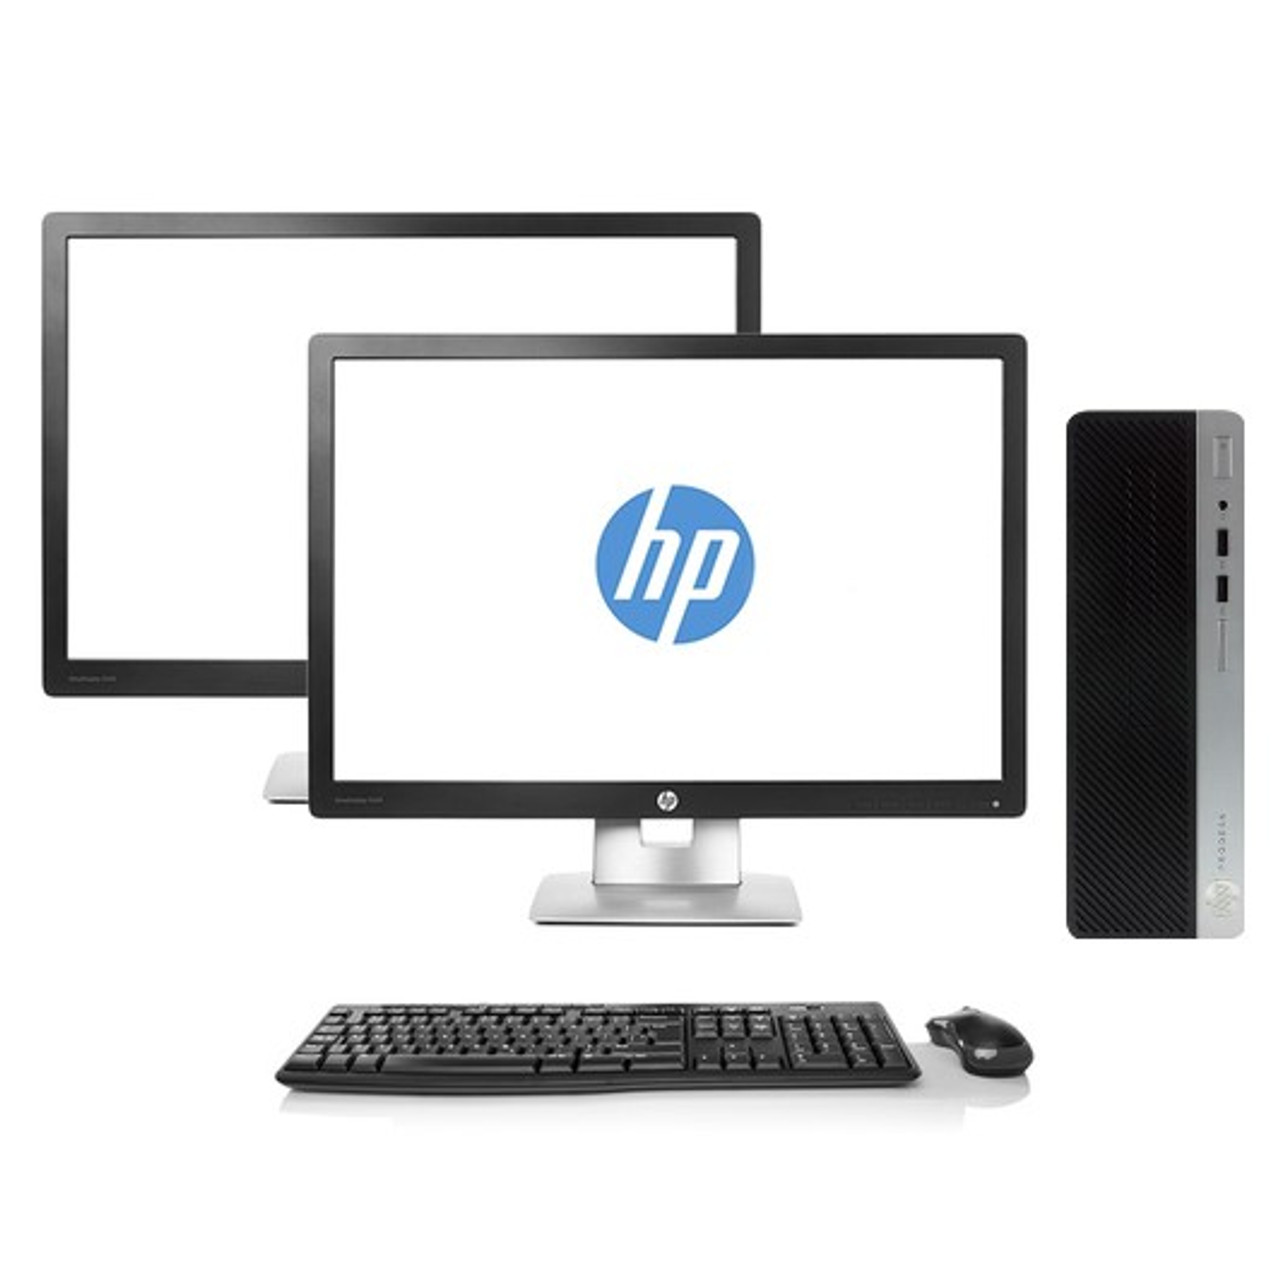 Dual Screen Monitor PC HP Computer Set Desktop i5 i7 SSD HDD Windows 10 WIFI